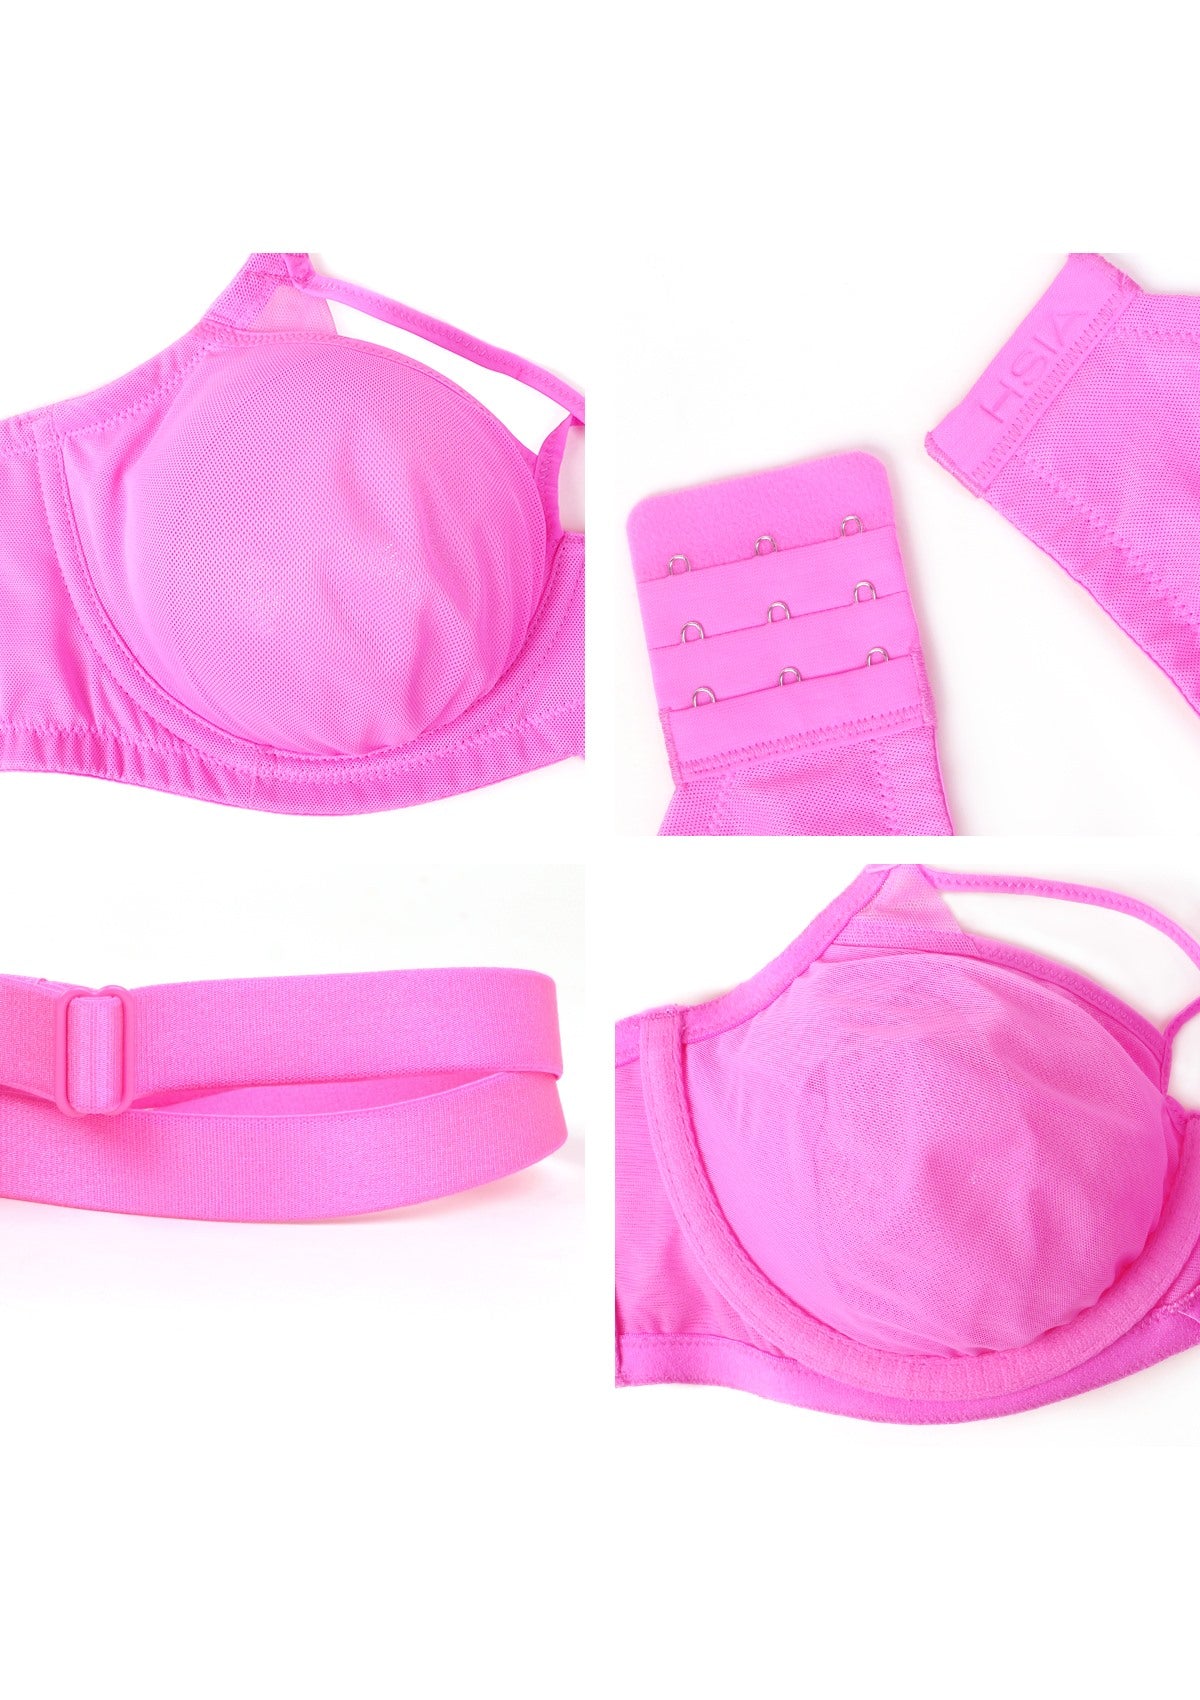 HSIA Billie Cross Front Strap Smooth Sheer Mesh Comfy Underwire Bra - Barbie Pink / 44 / C